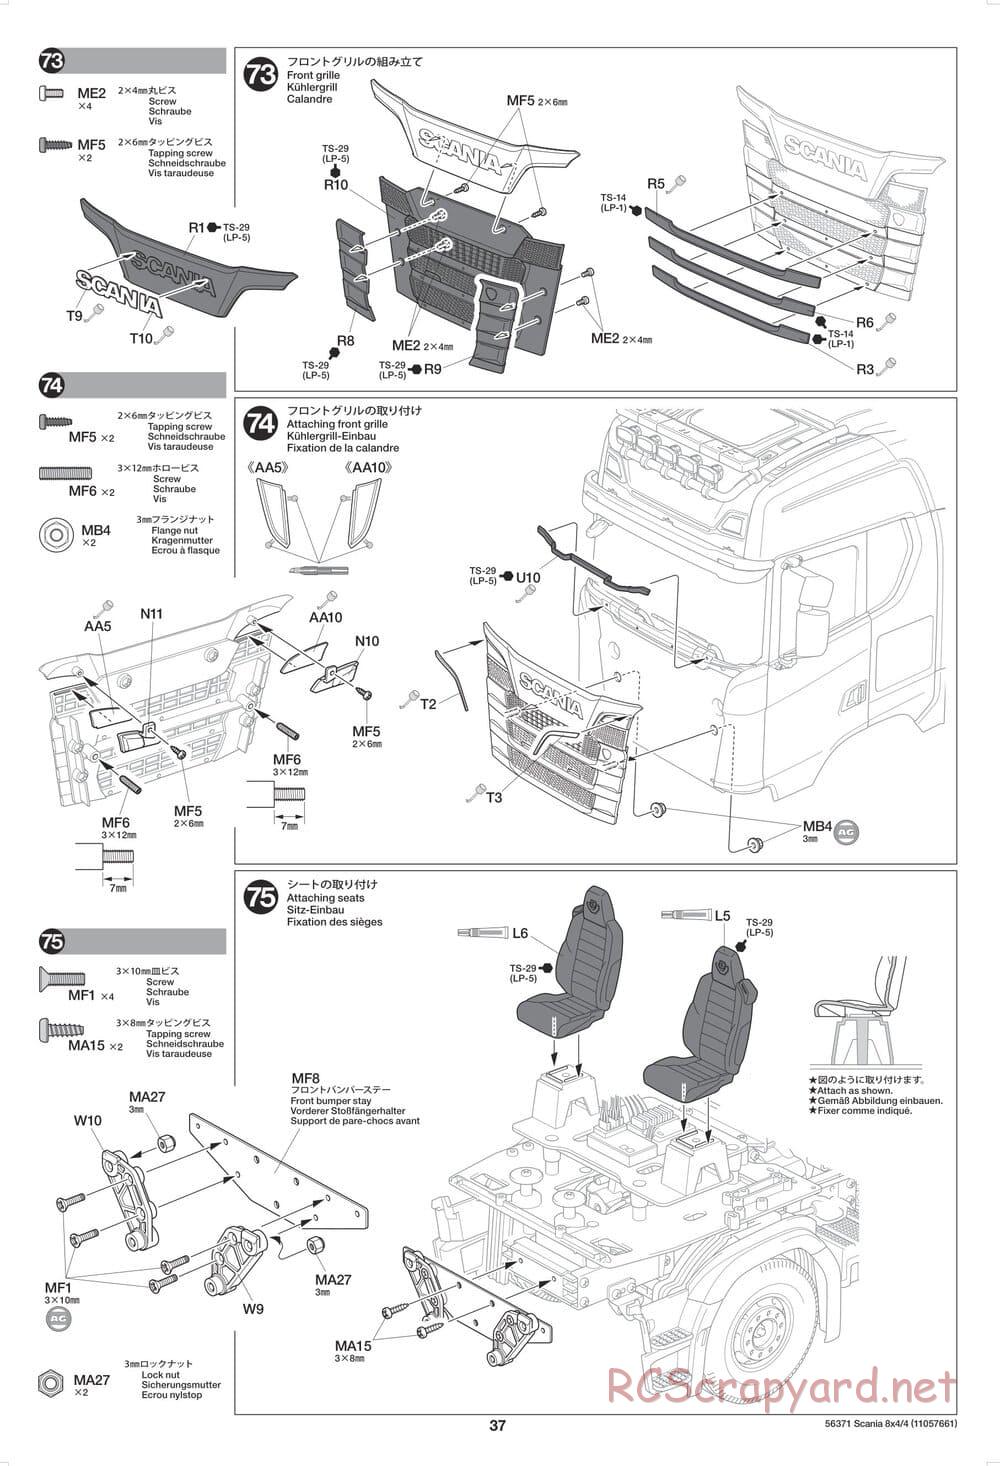 Tamiya - Scania 770 S 8x4/4 Chassis - Manual - Page 37